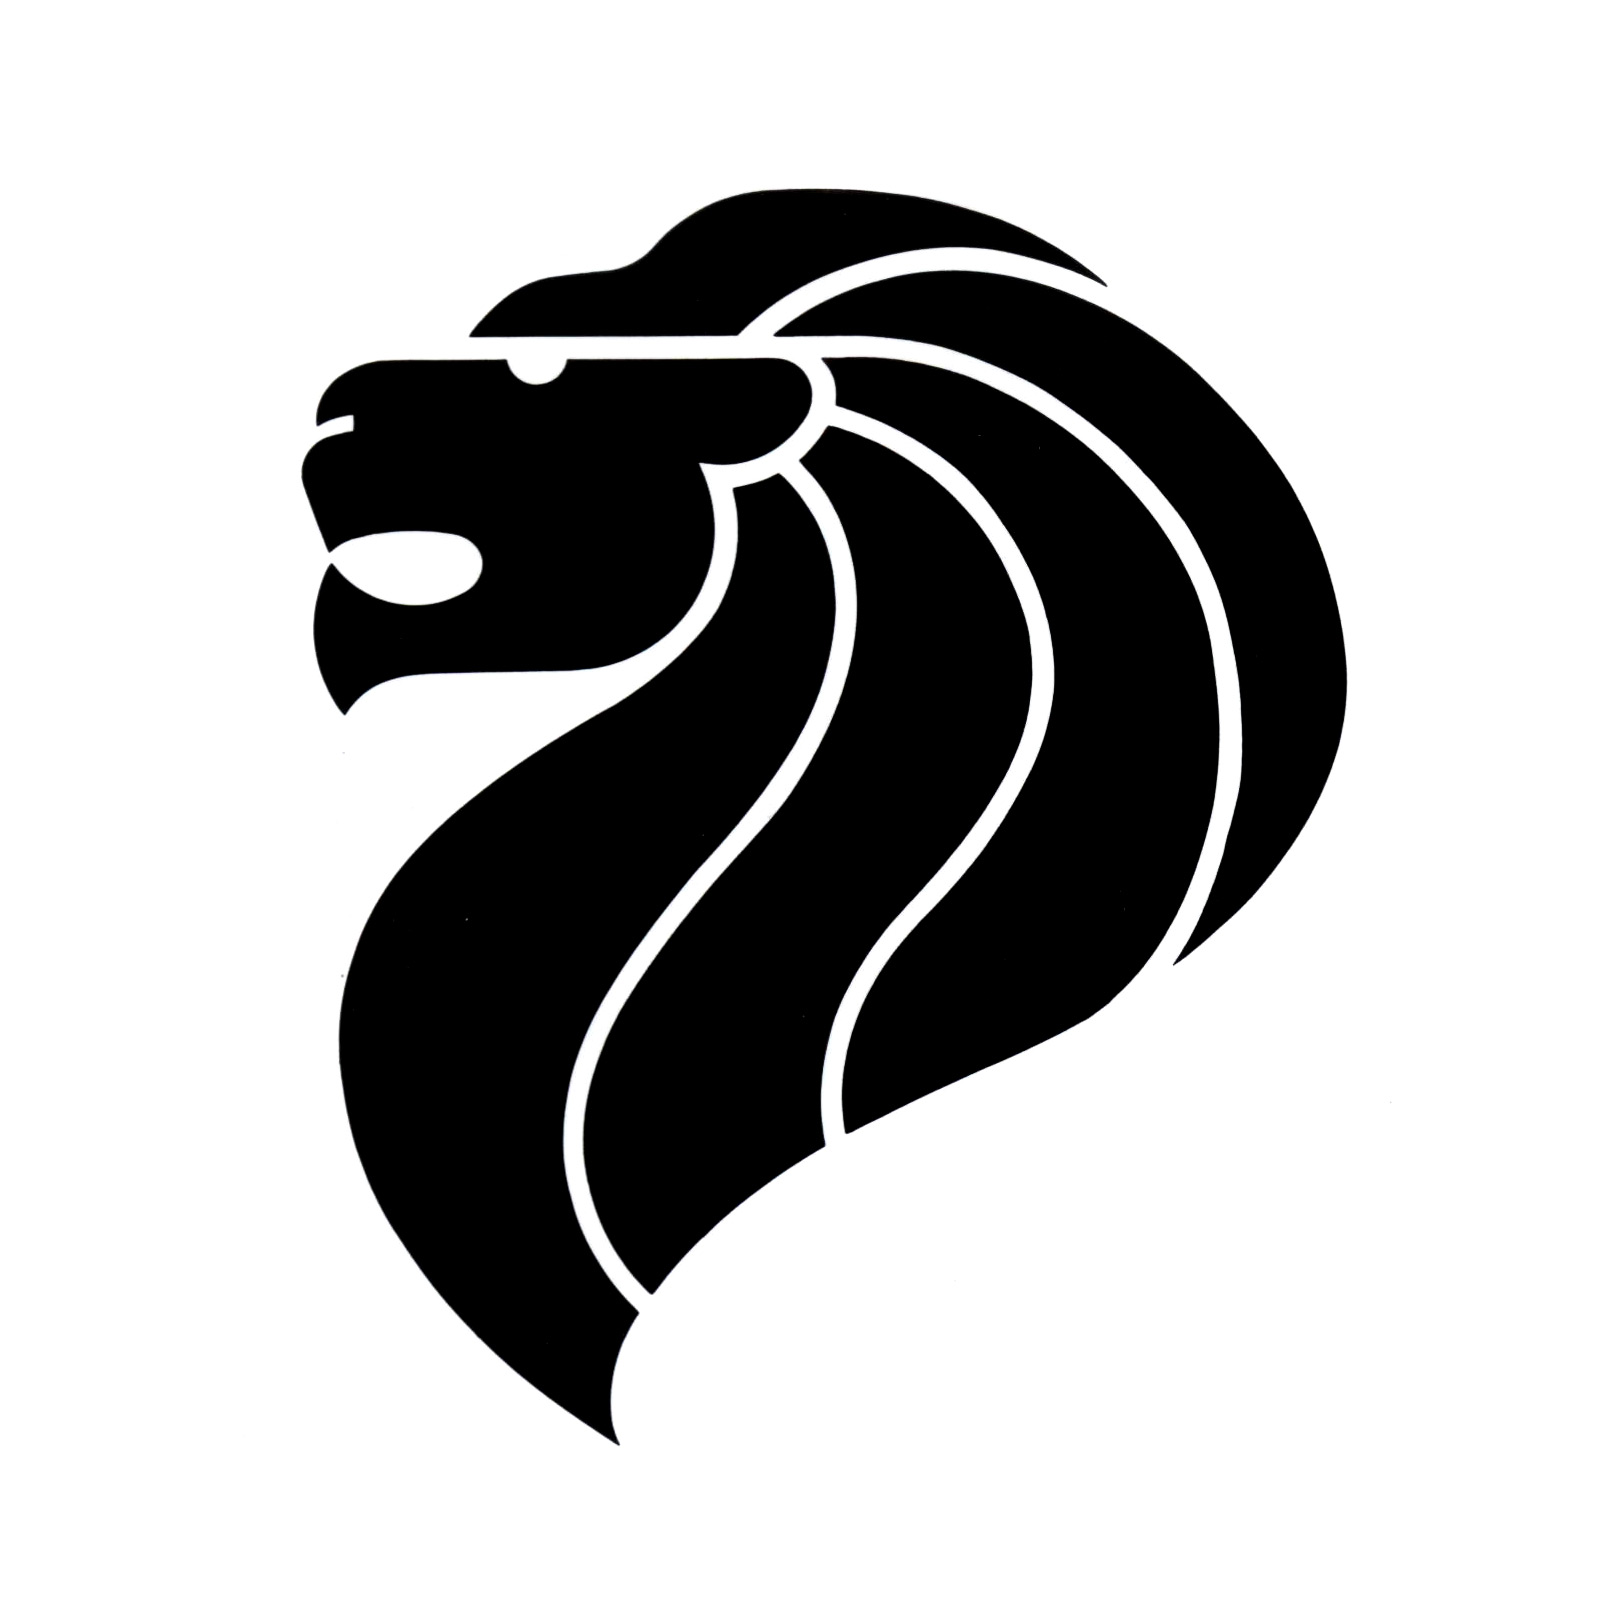 Singapore's symbols :): The lion head symbol